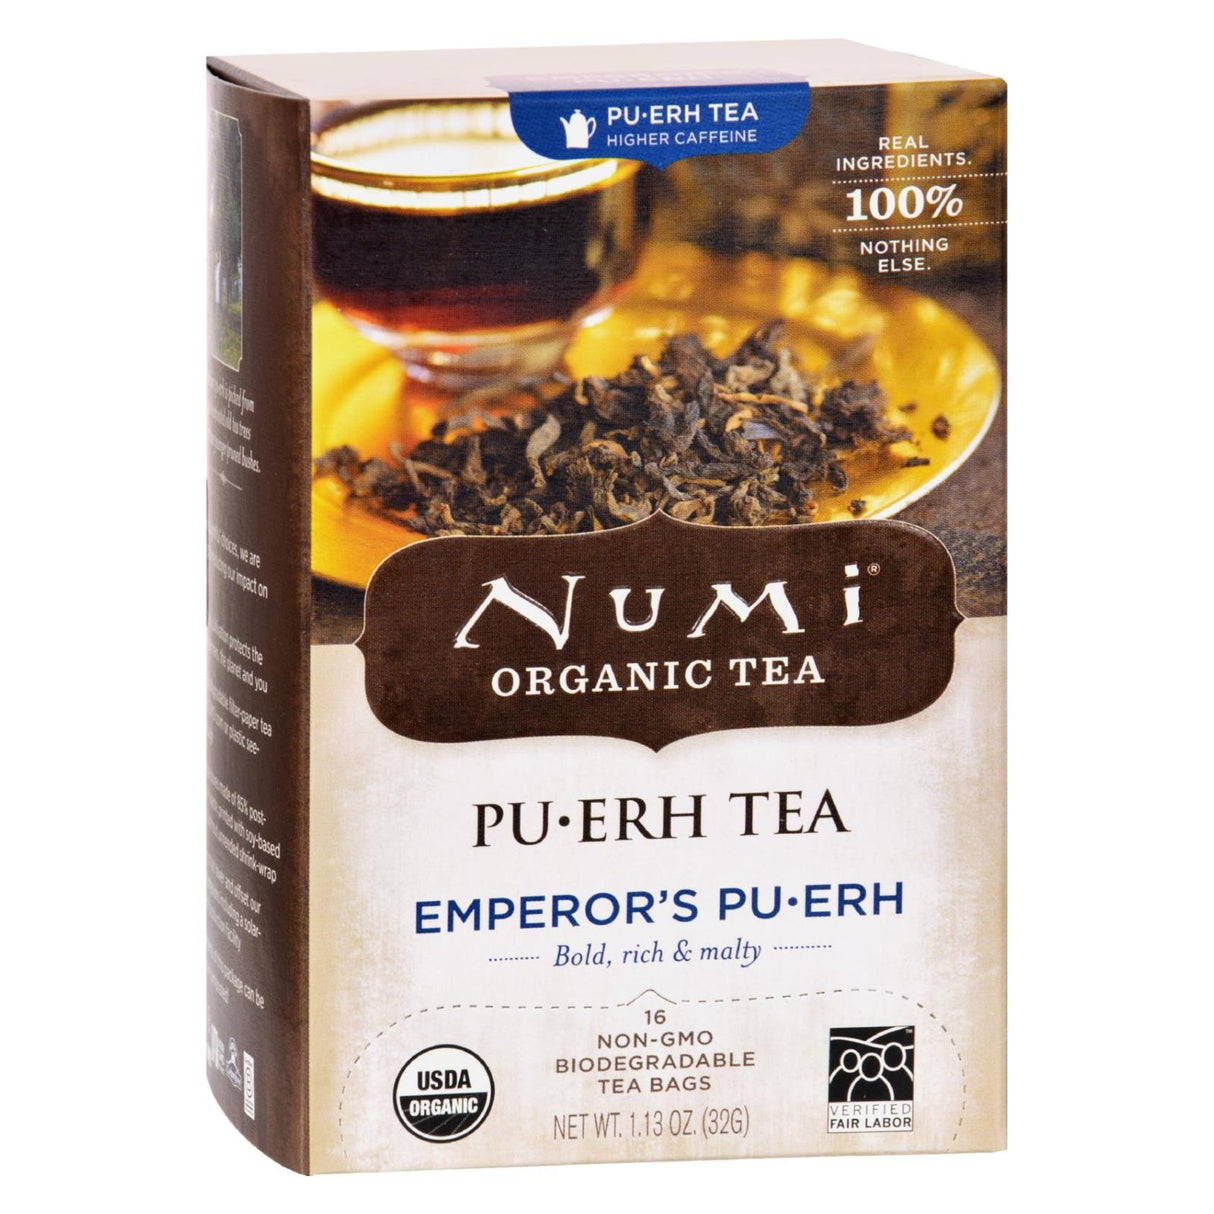 Numi Emperor's Puerh Black Tea, Pack of 6 Boxes with 16 Tea Bags Each - Cozy Farm 